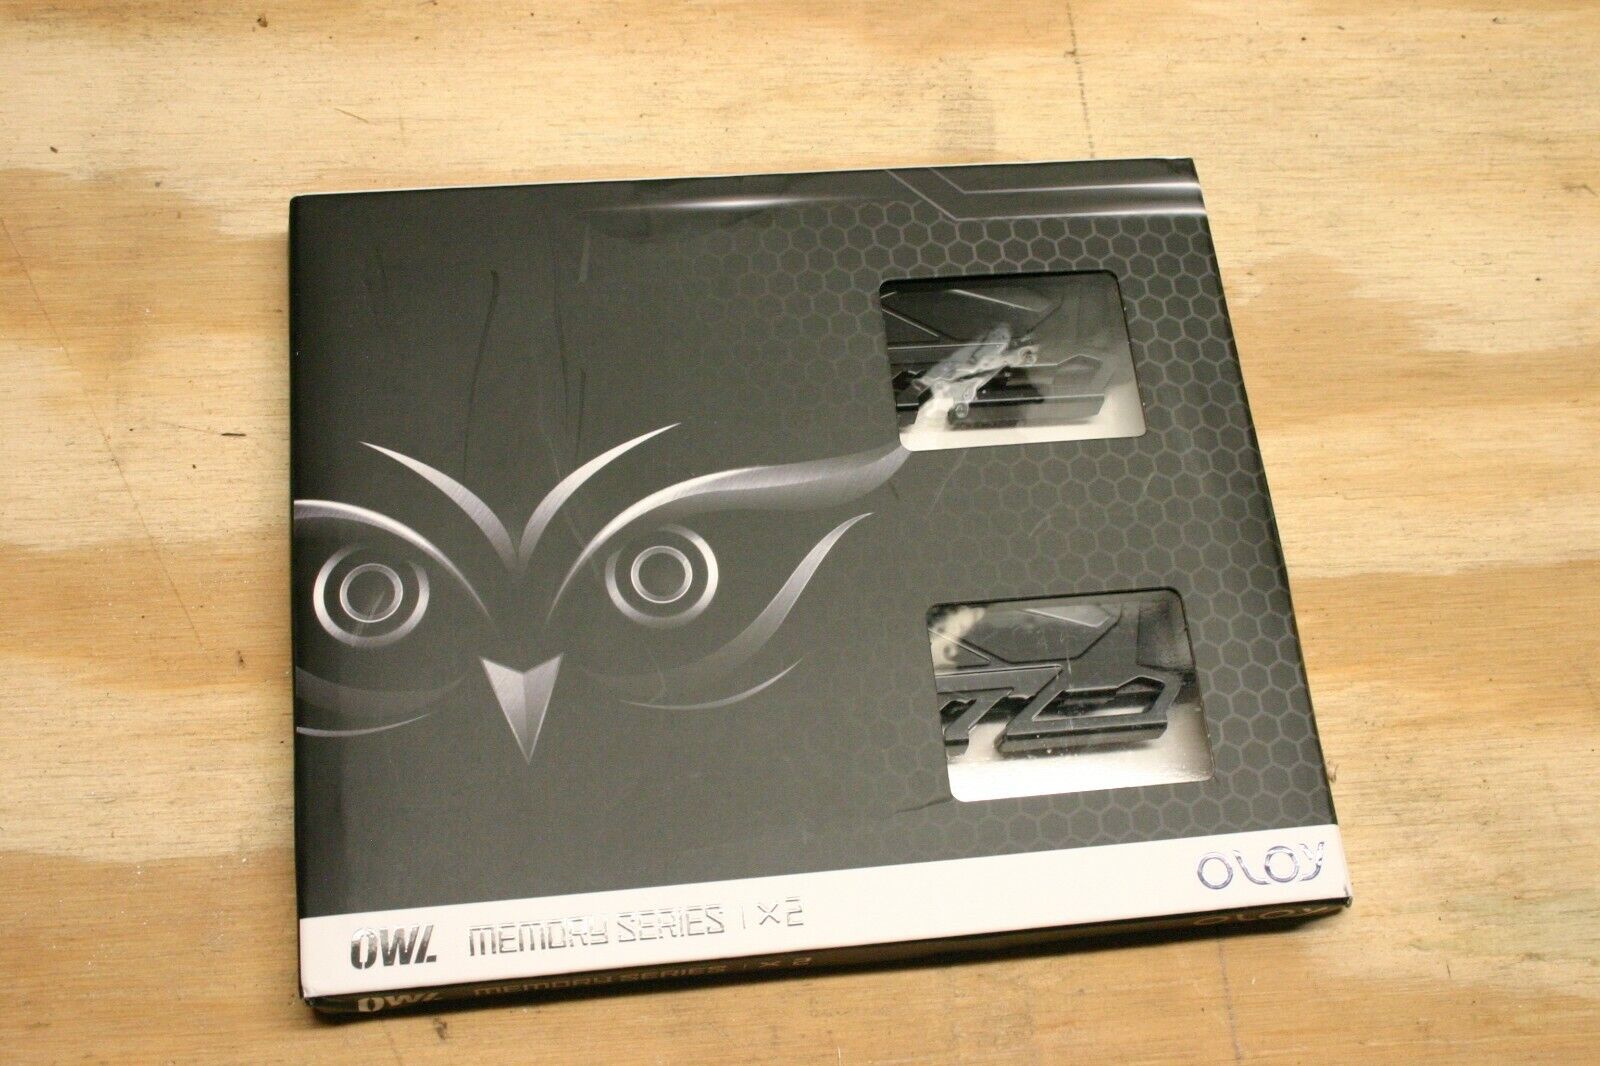 Oloy OWL DDR4 RAM 16gb 2x8 3000mhz